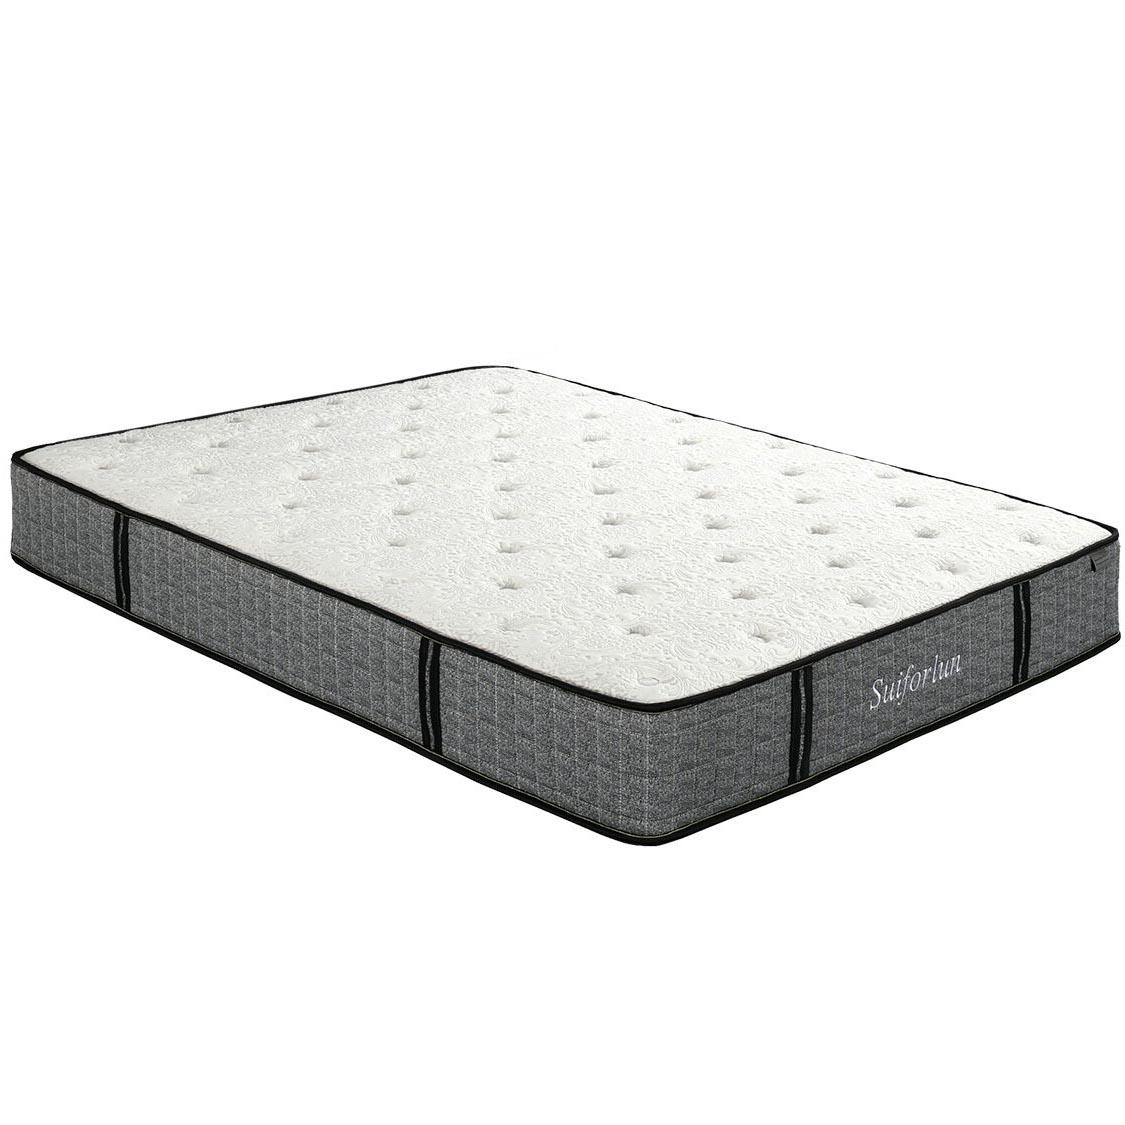 comfortable hybrid mattress 12 inch manufacturer for hotel-2